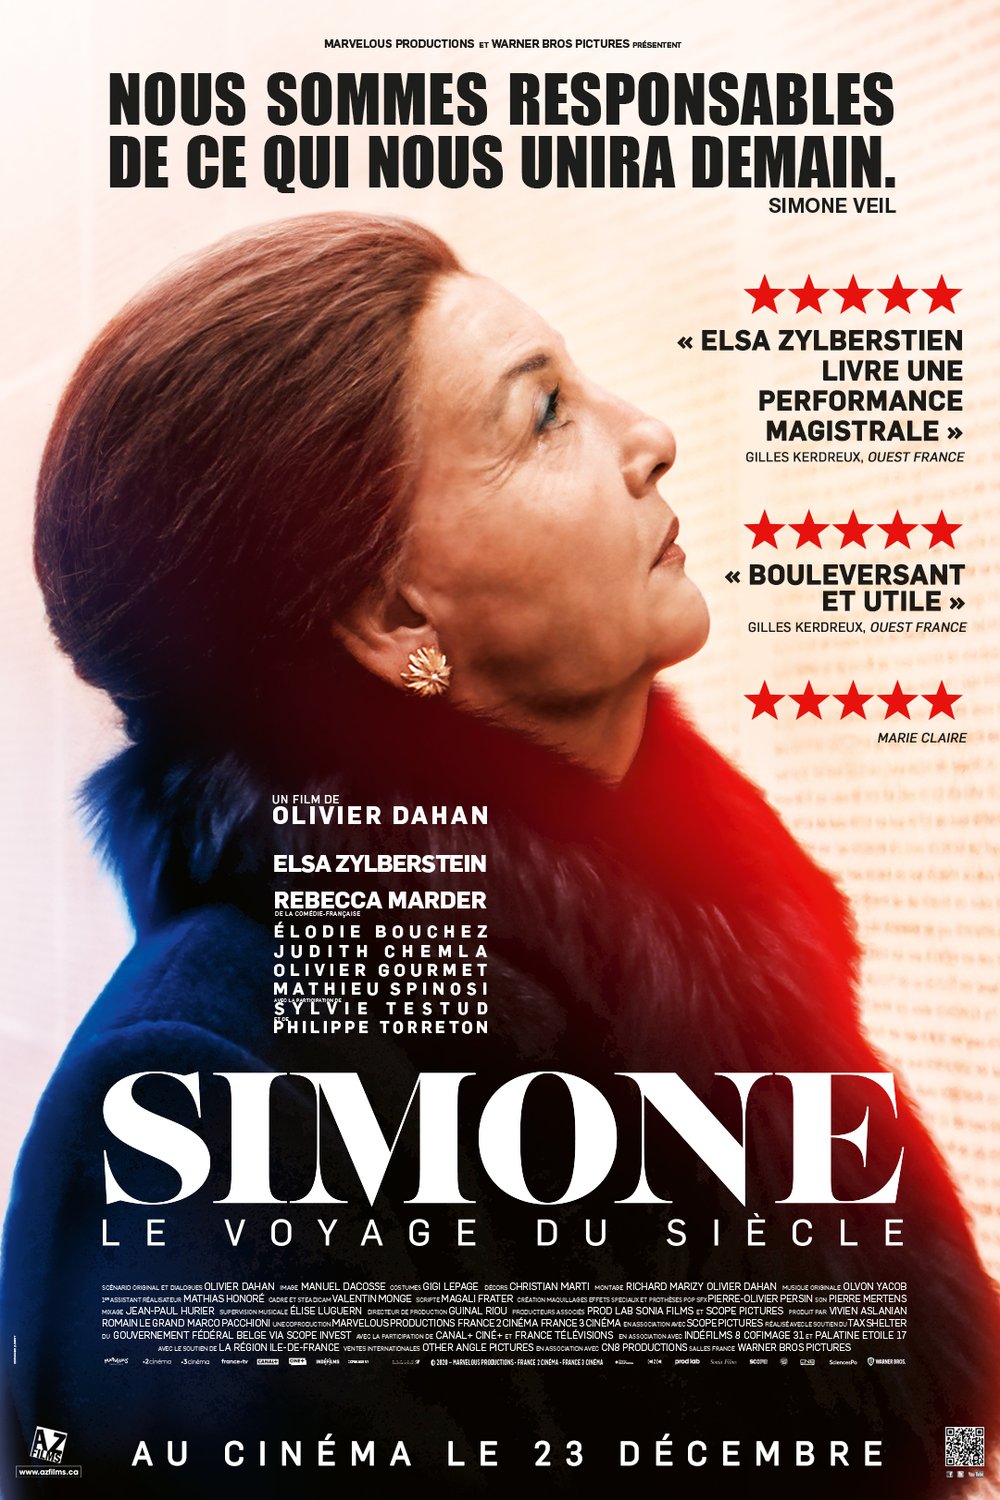 Poster of the movie Simone - Le voyage du siècle